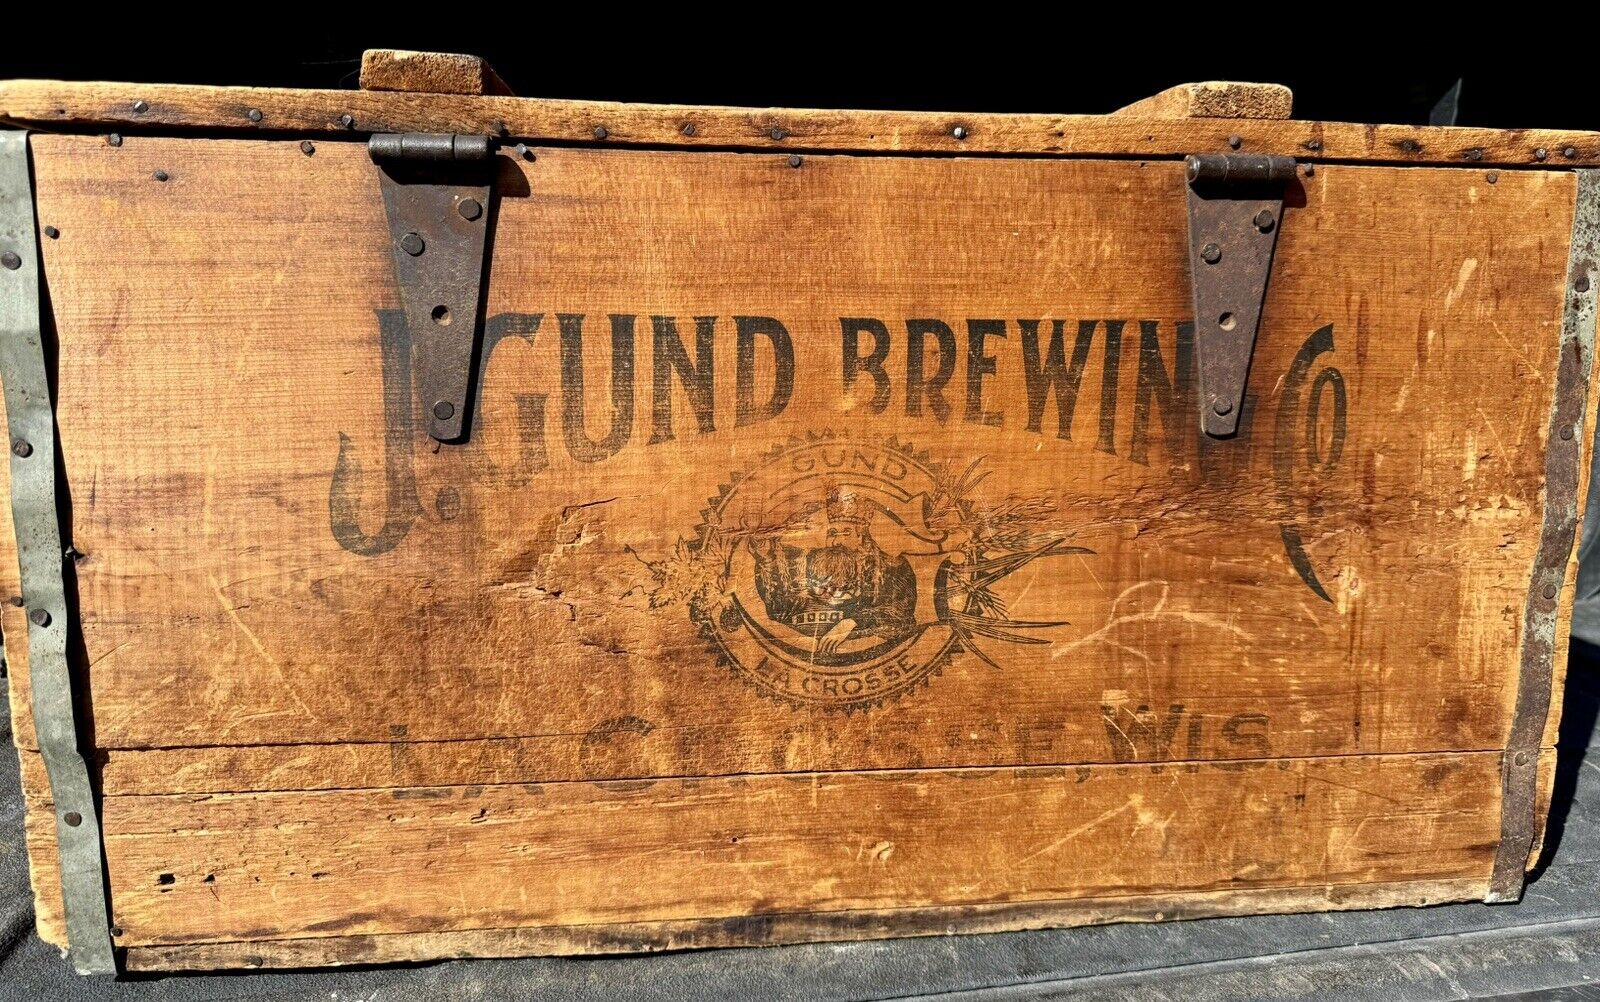 Vtg J. Gund Brewing wood Beer crate La Cross Wisconsin Advertising Antique